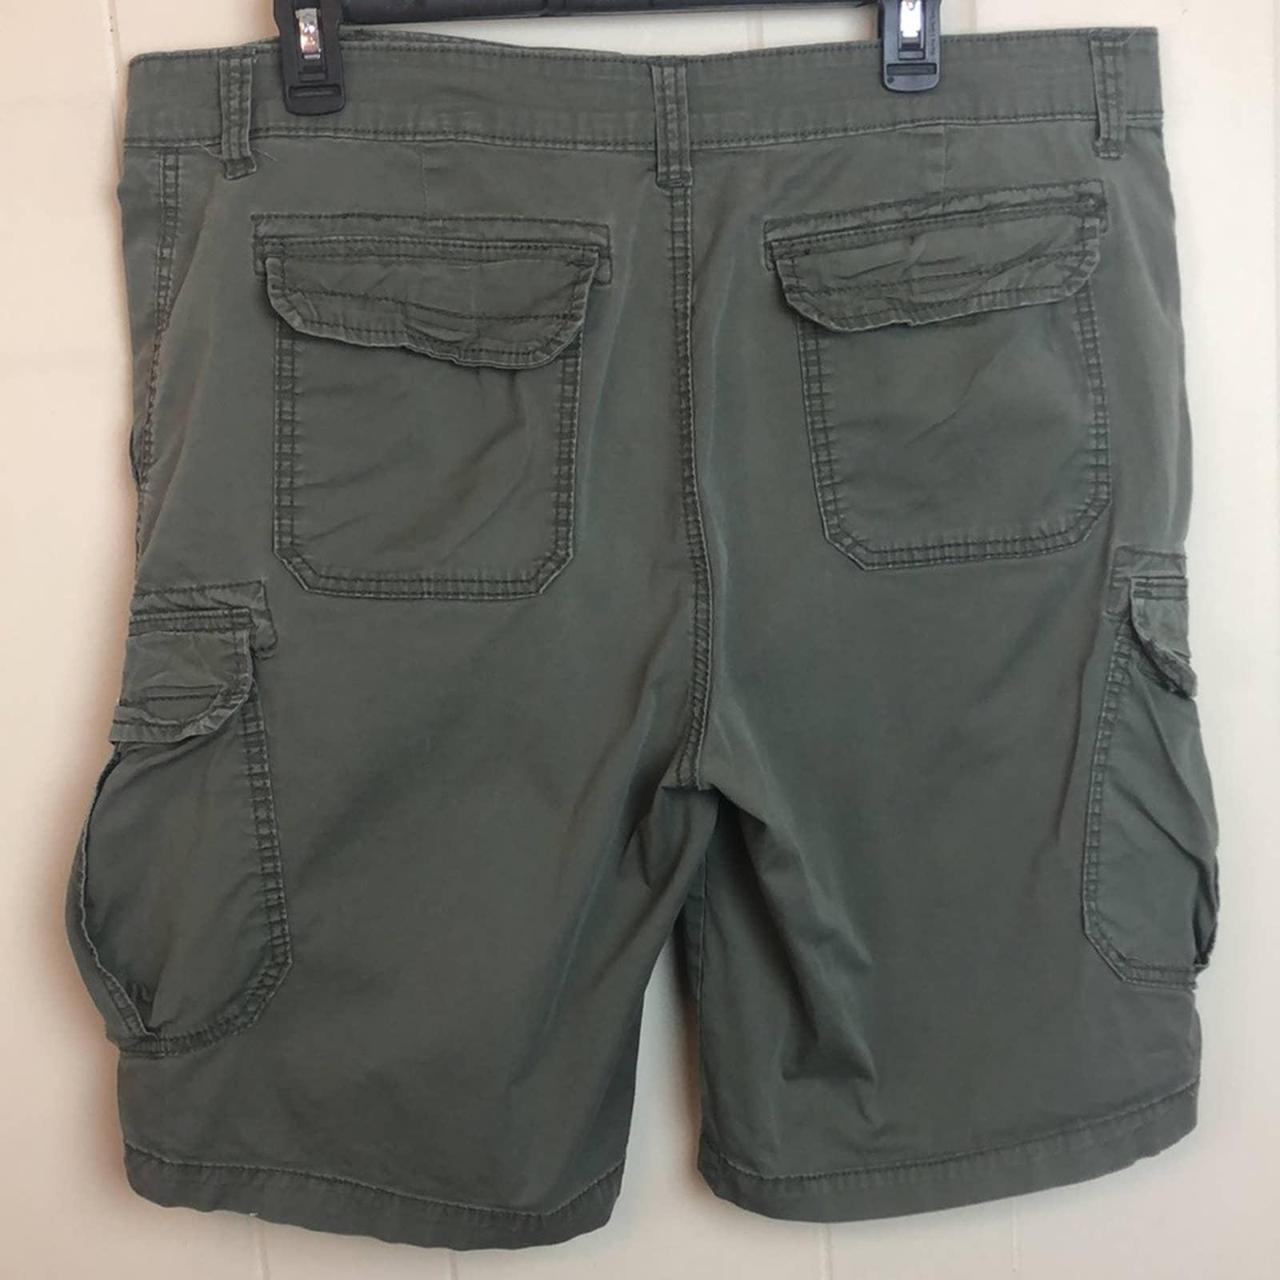 Union Bay Men's Green Shorts (2)